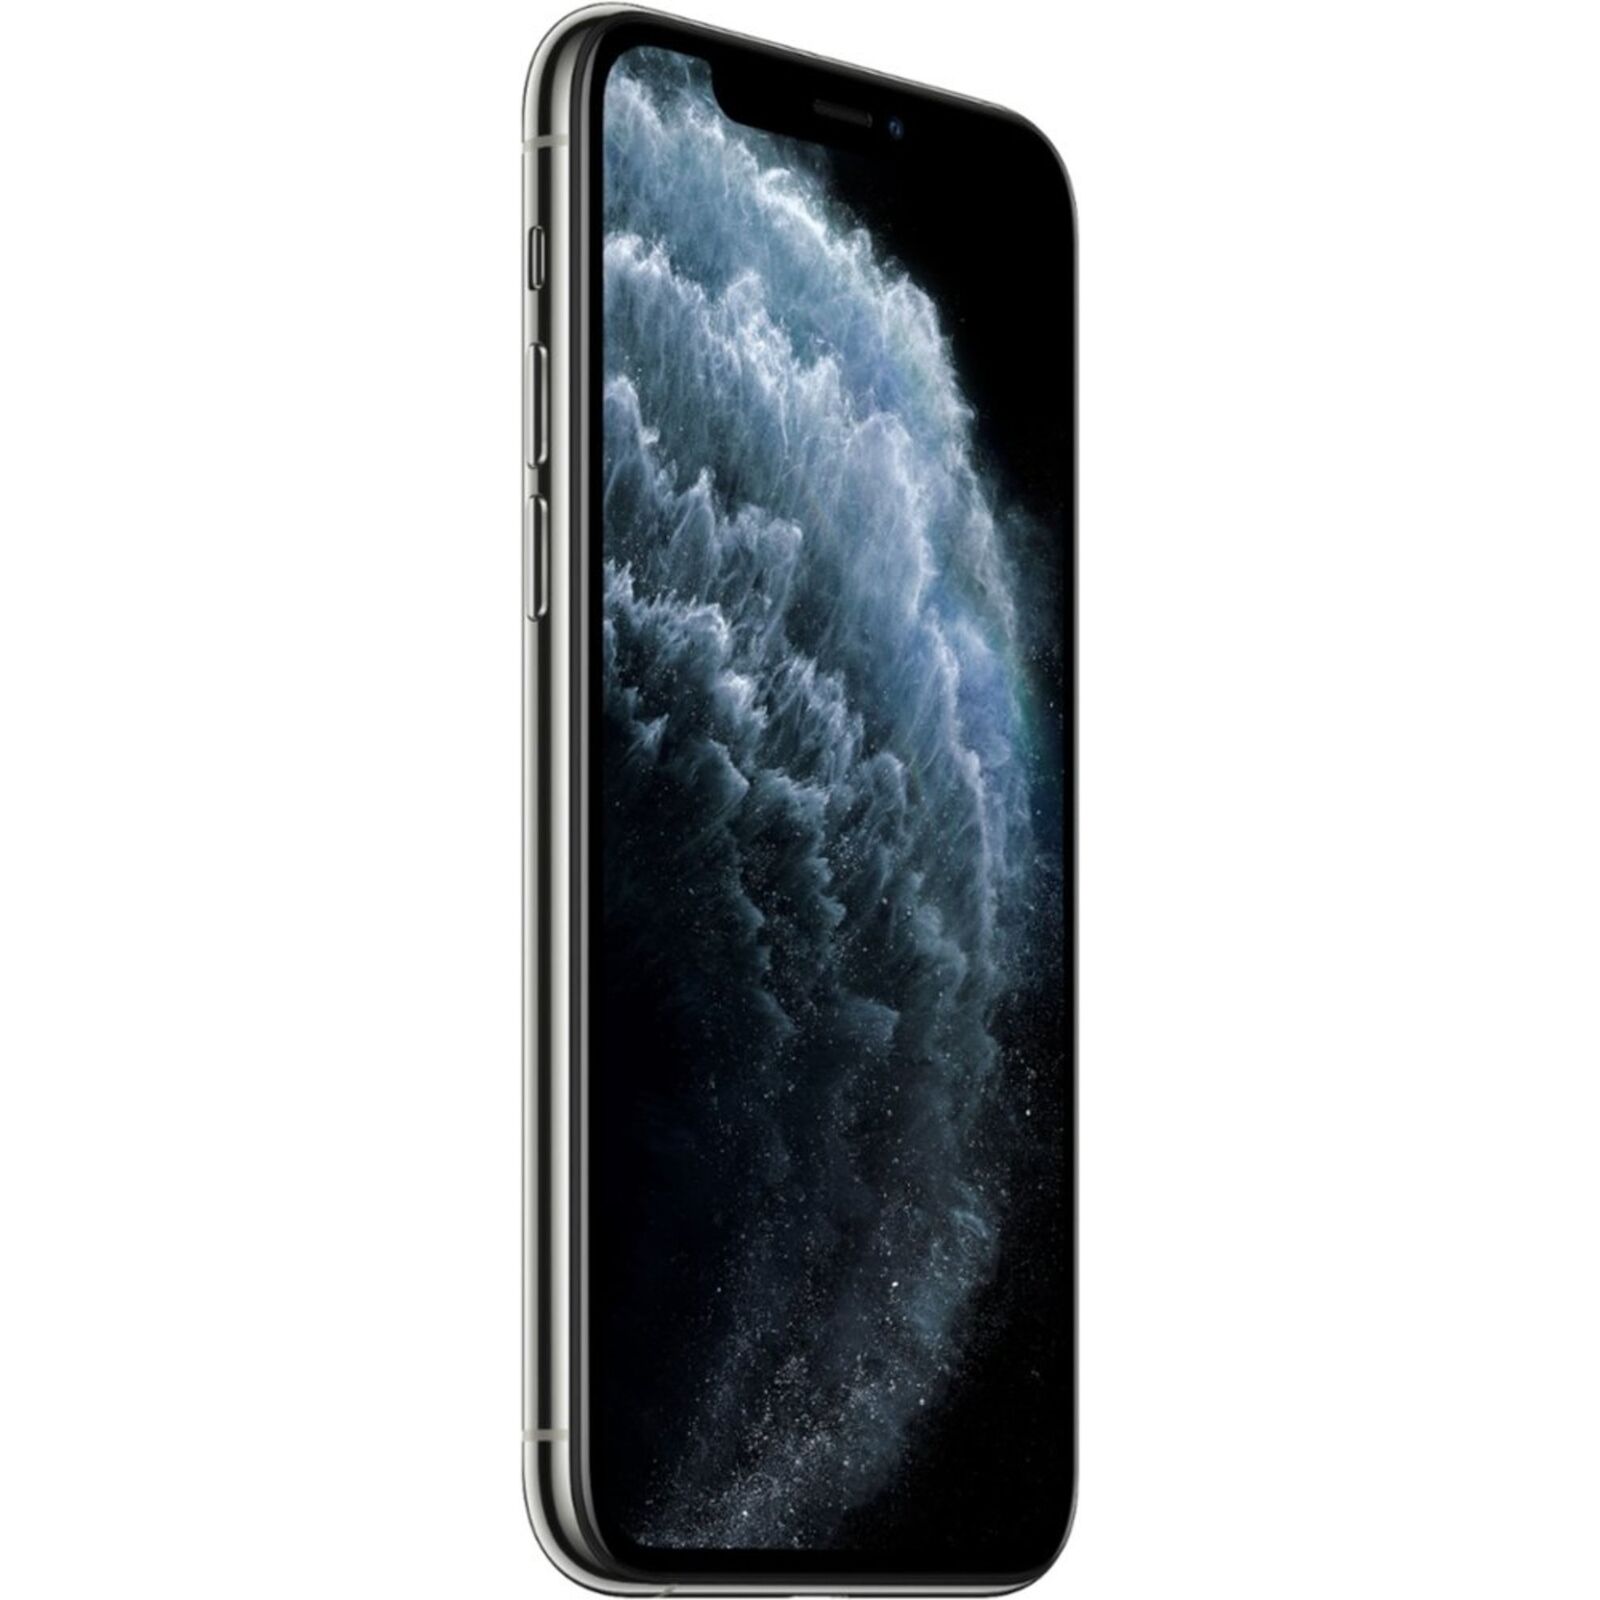 Apple iPhone 11 Pro - 256GB - Silver (Verizon) A2160 (CDMA + GSM 